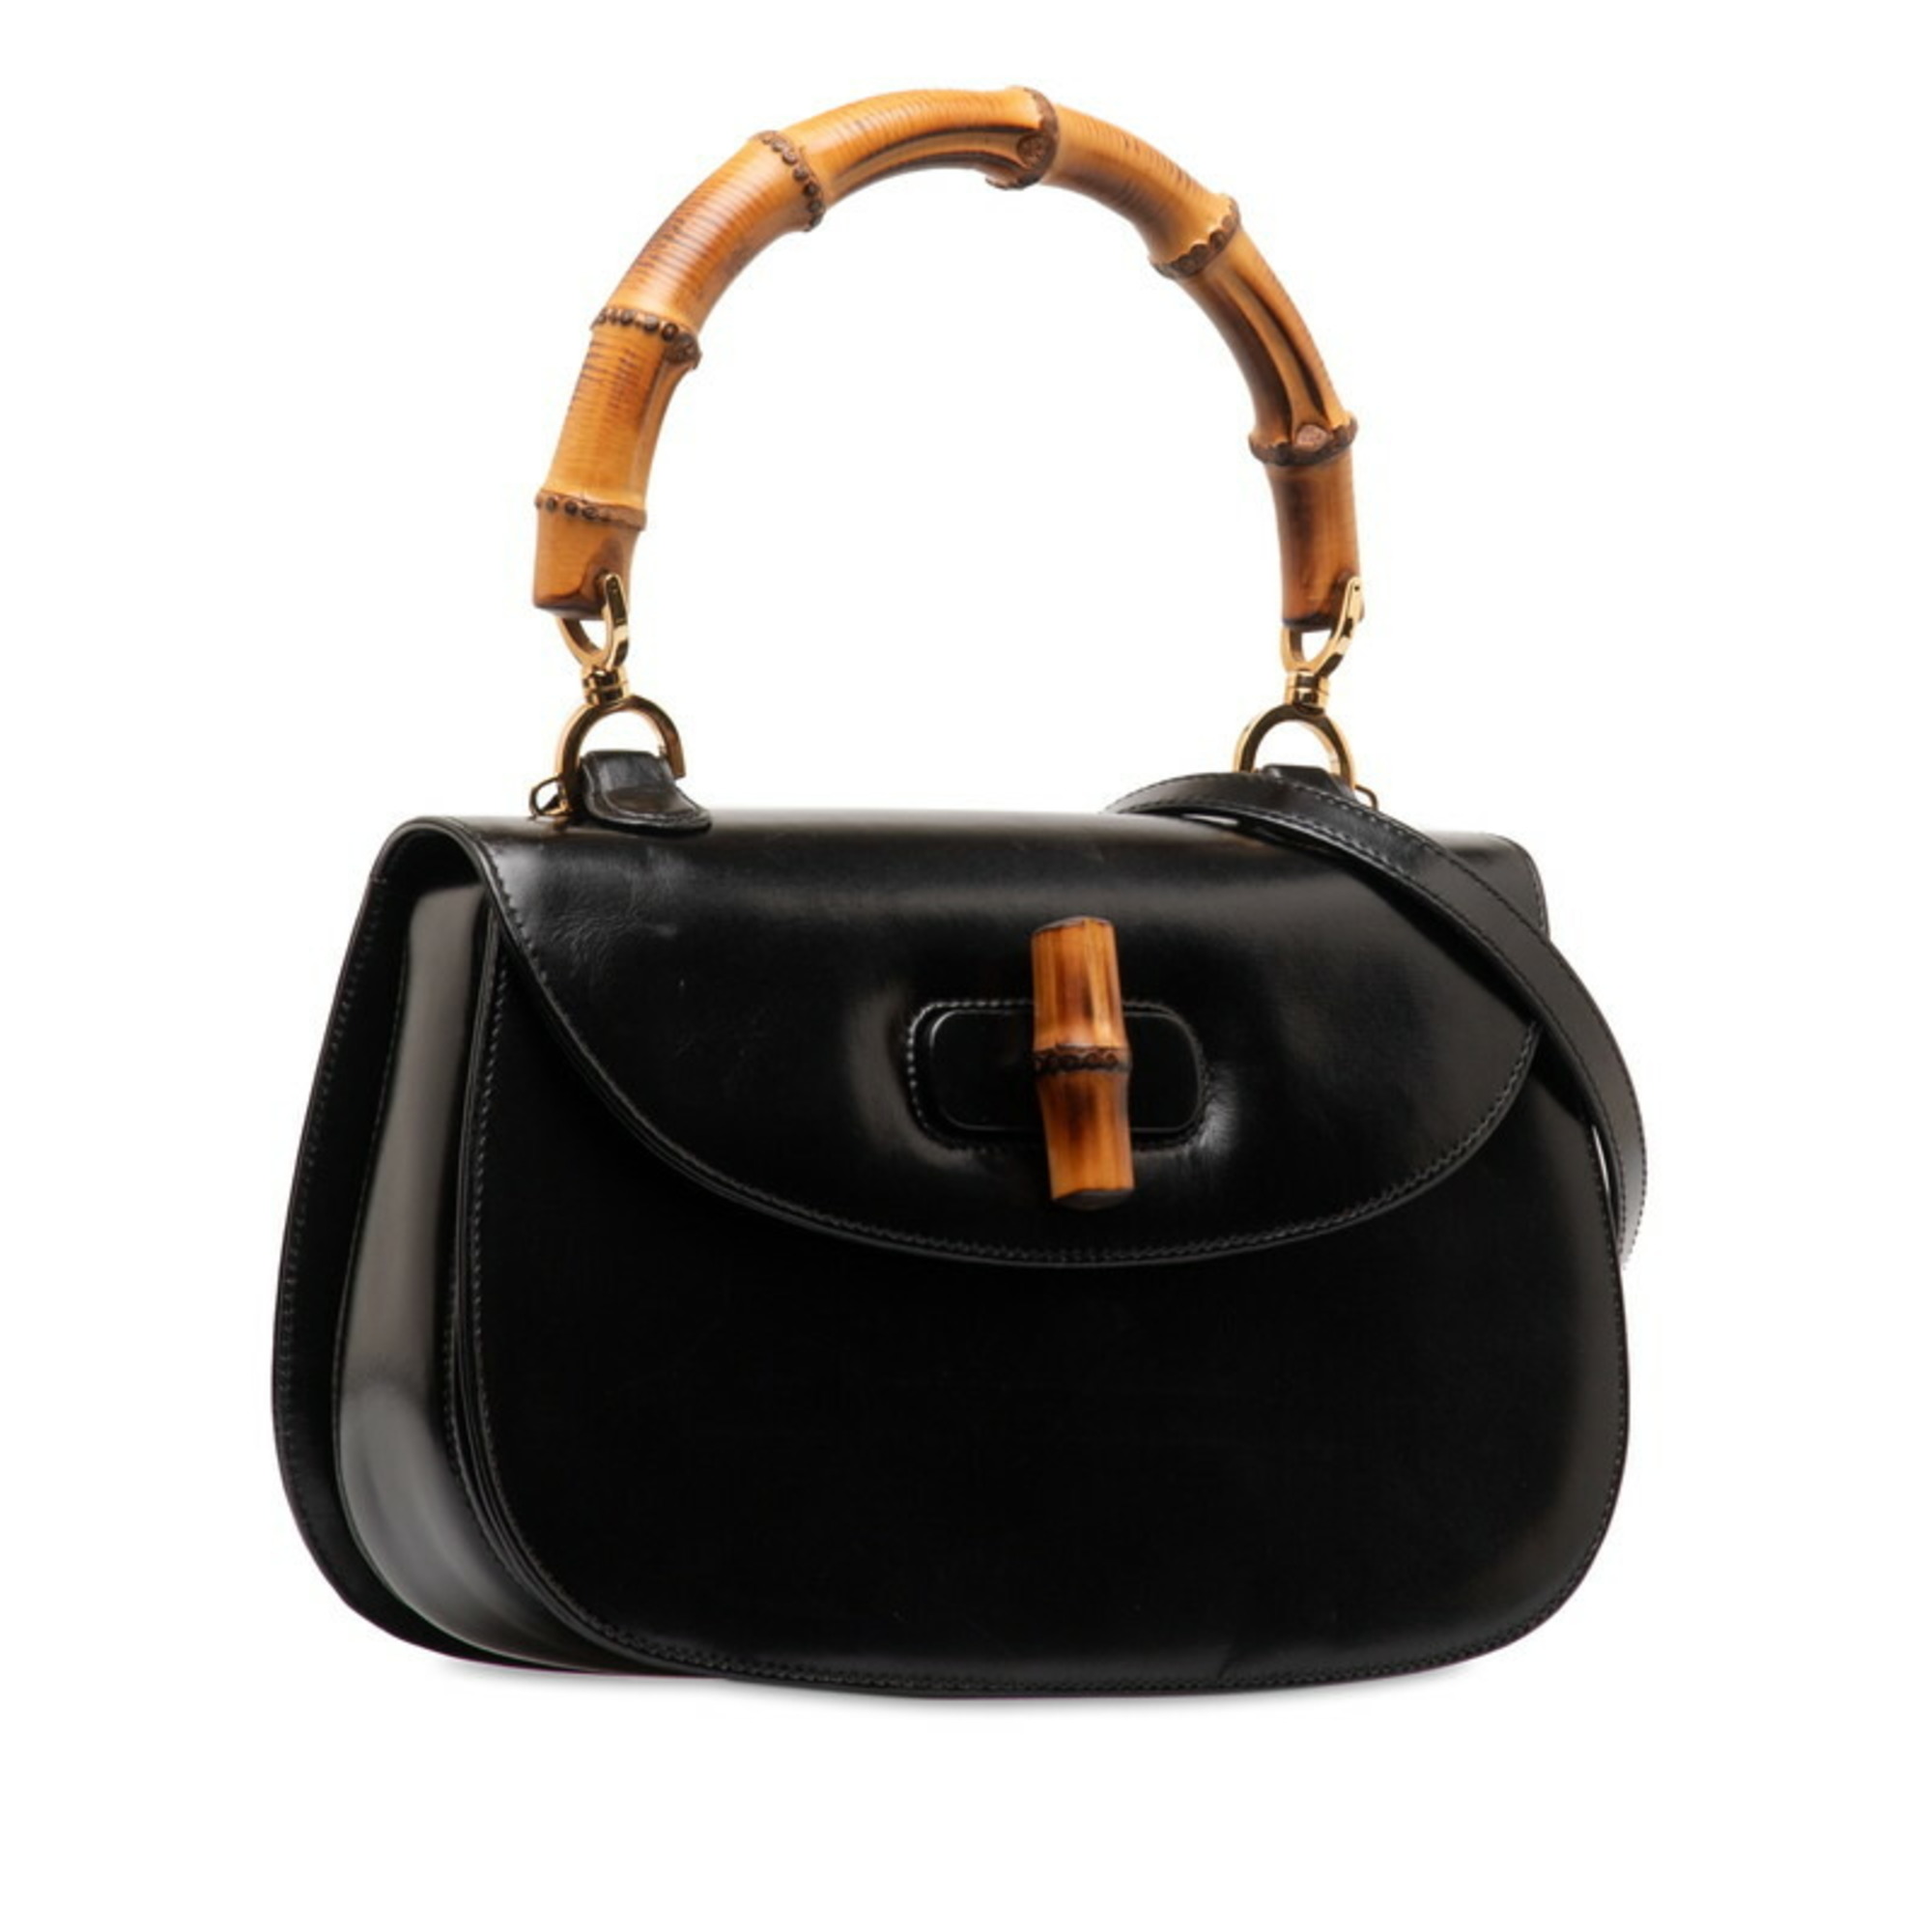 Gucci Bamboo Handbag Shoulder Bag 000 1364 Black Leather Women's GUCCI